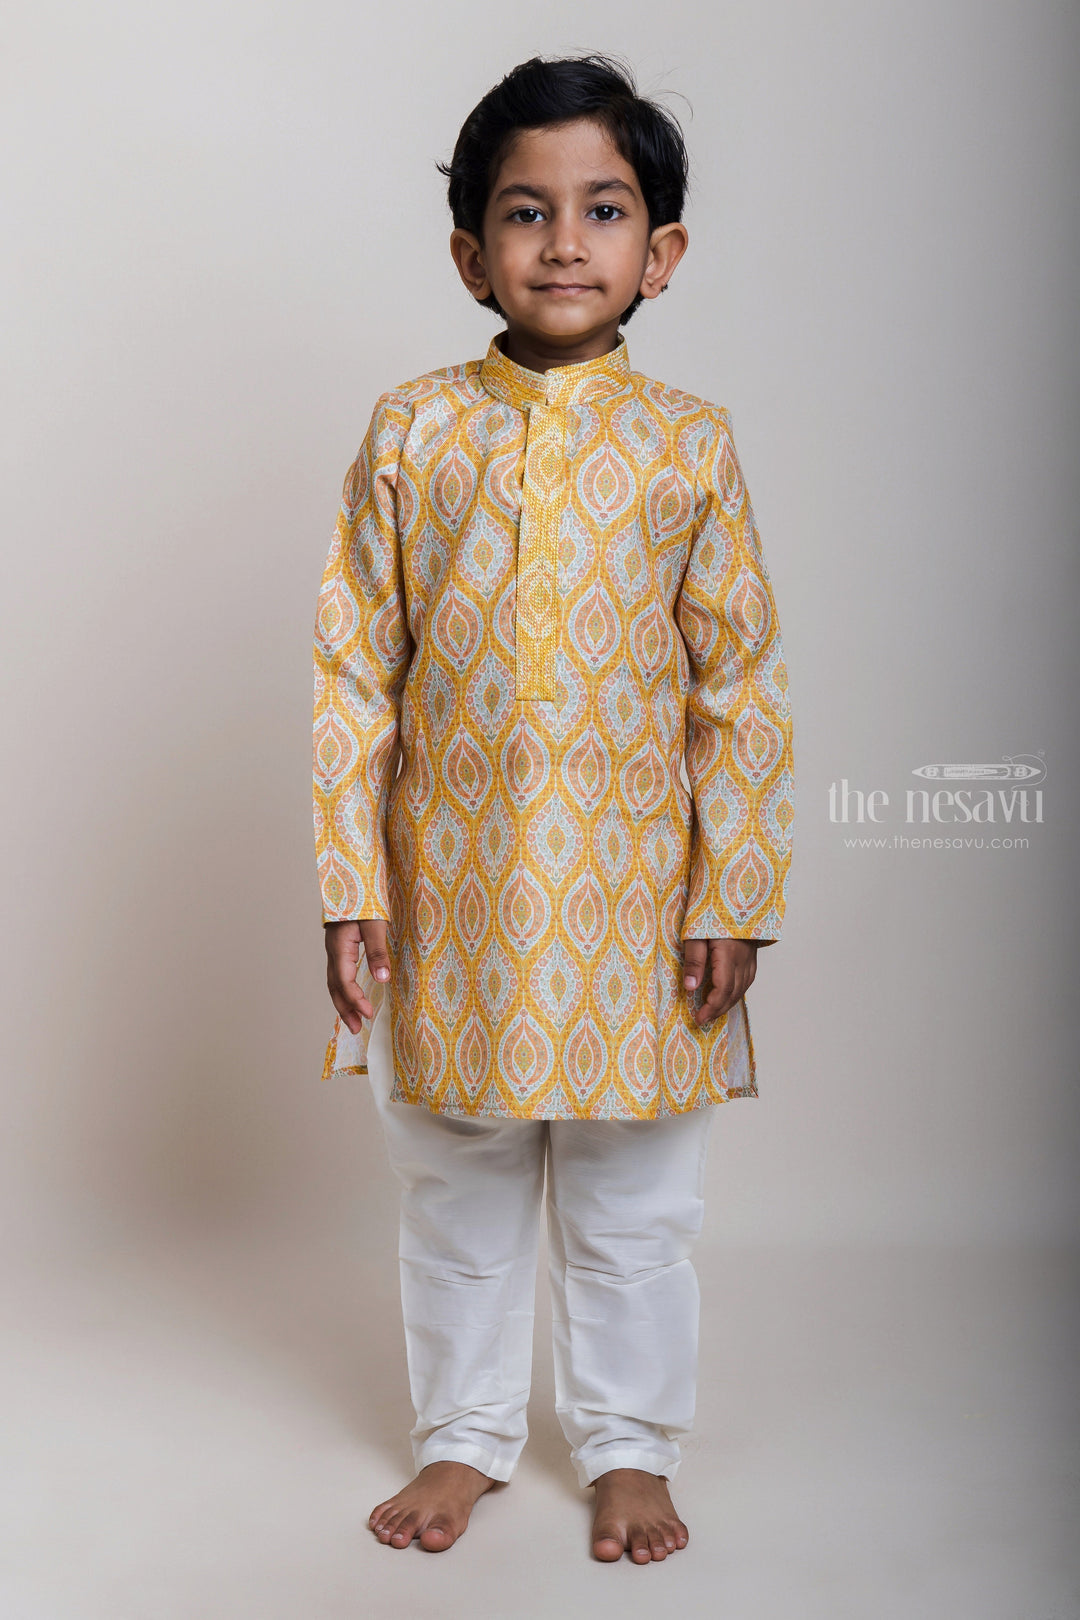 The Nesavu Boys Kurtha Set Latest Printed Yellow Cotton Kurta With Elastic Pyjama For Little Boys Nesavu 14 (6M) / Yellow / Linen BES234-14 Best Ethnic Wear Collection For Boys| Exclusive Designs| The Nesavu